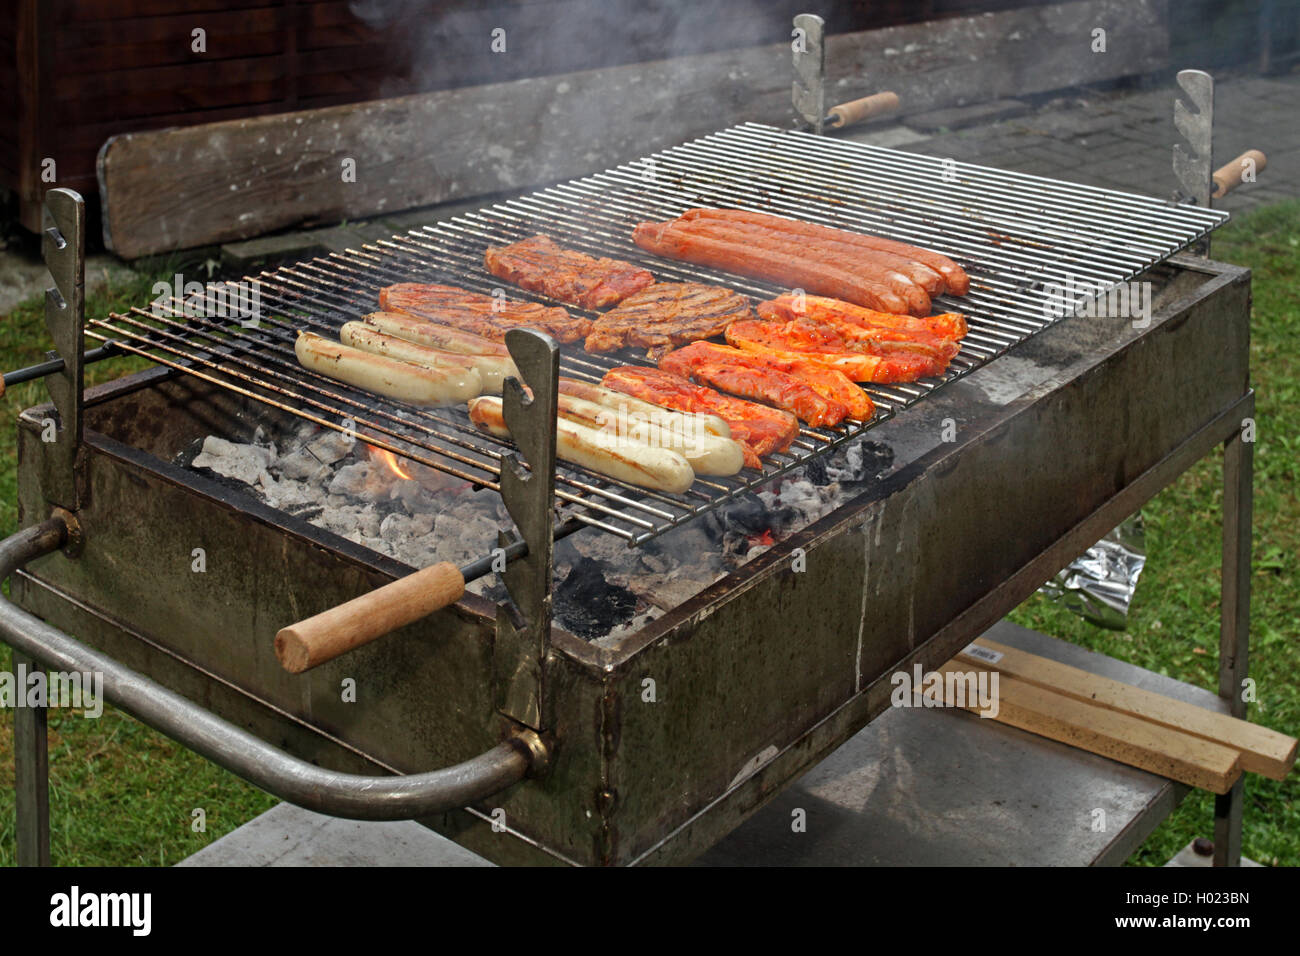 Grillfleisch auf einem Holzkohlegrill, Deutschland | grill meats on a charcoal grill, Germany | BLWS429325.jpg [ (c) blickwinkel Stock Photo